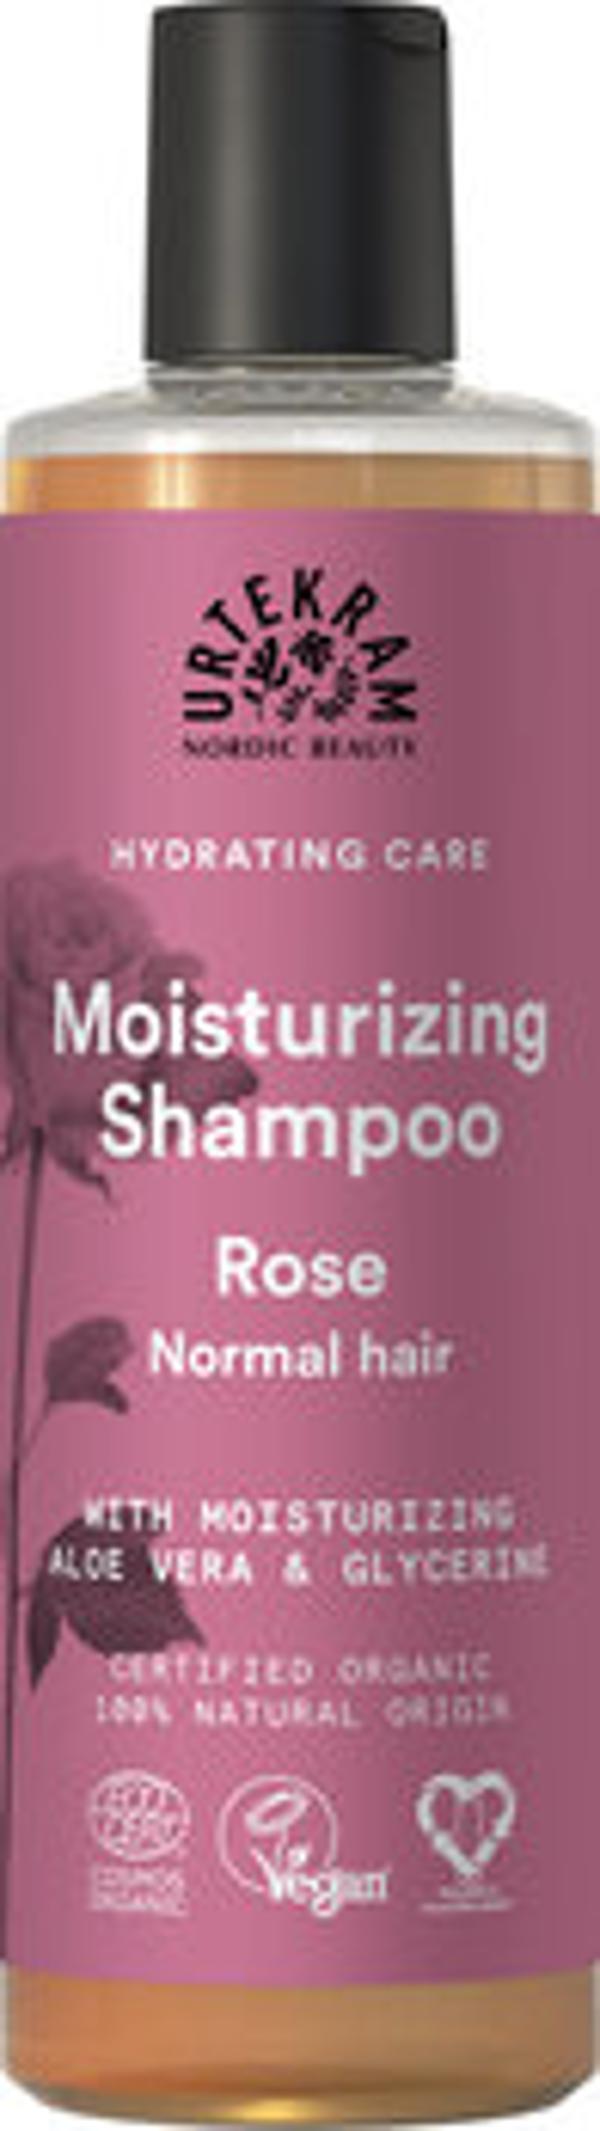 Produktfoto zu Rose Shampoo, normales Haar